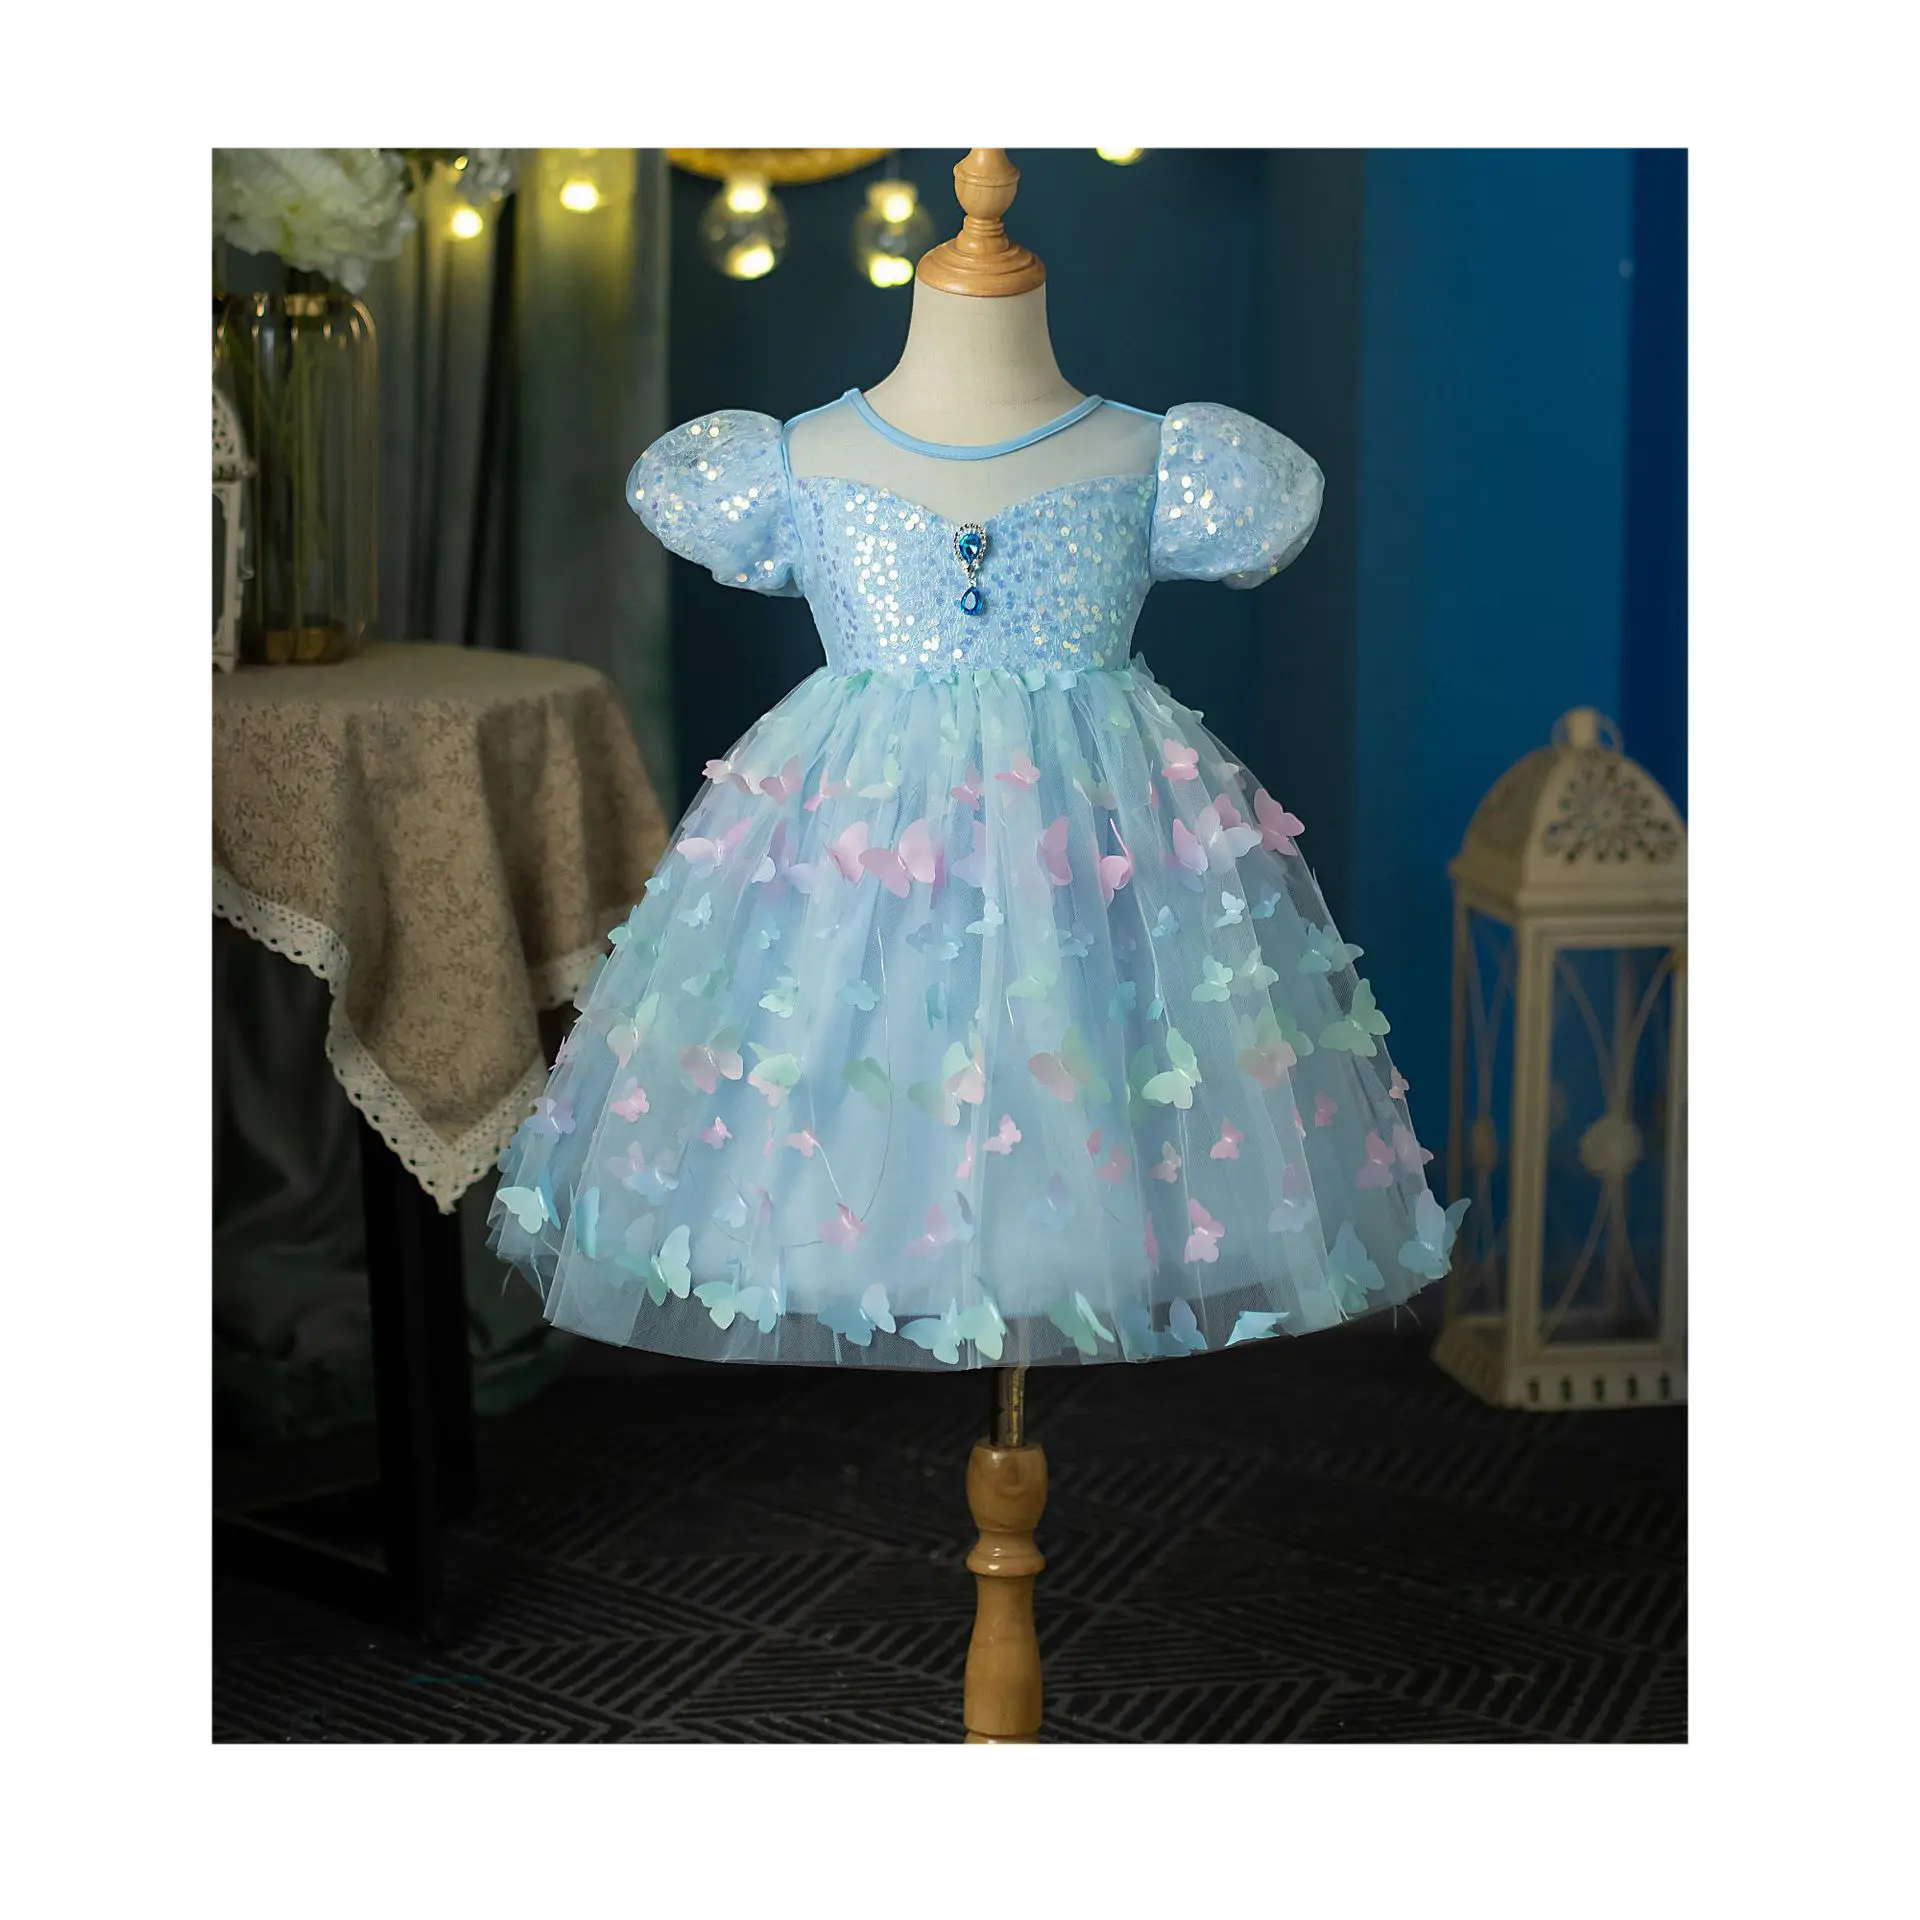 Gaun anak perempuan cantik gaun pesta hadiah anak perempuan kain kasa berpakaian jaring kupu-kupu ulang tahun gaun anak perempuan putri bunga